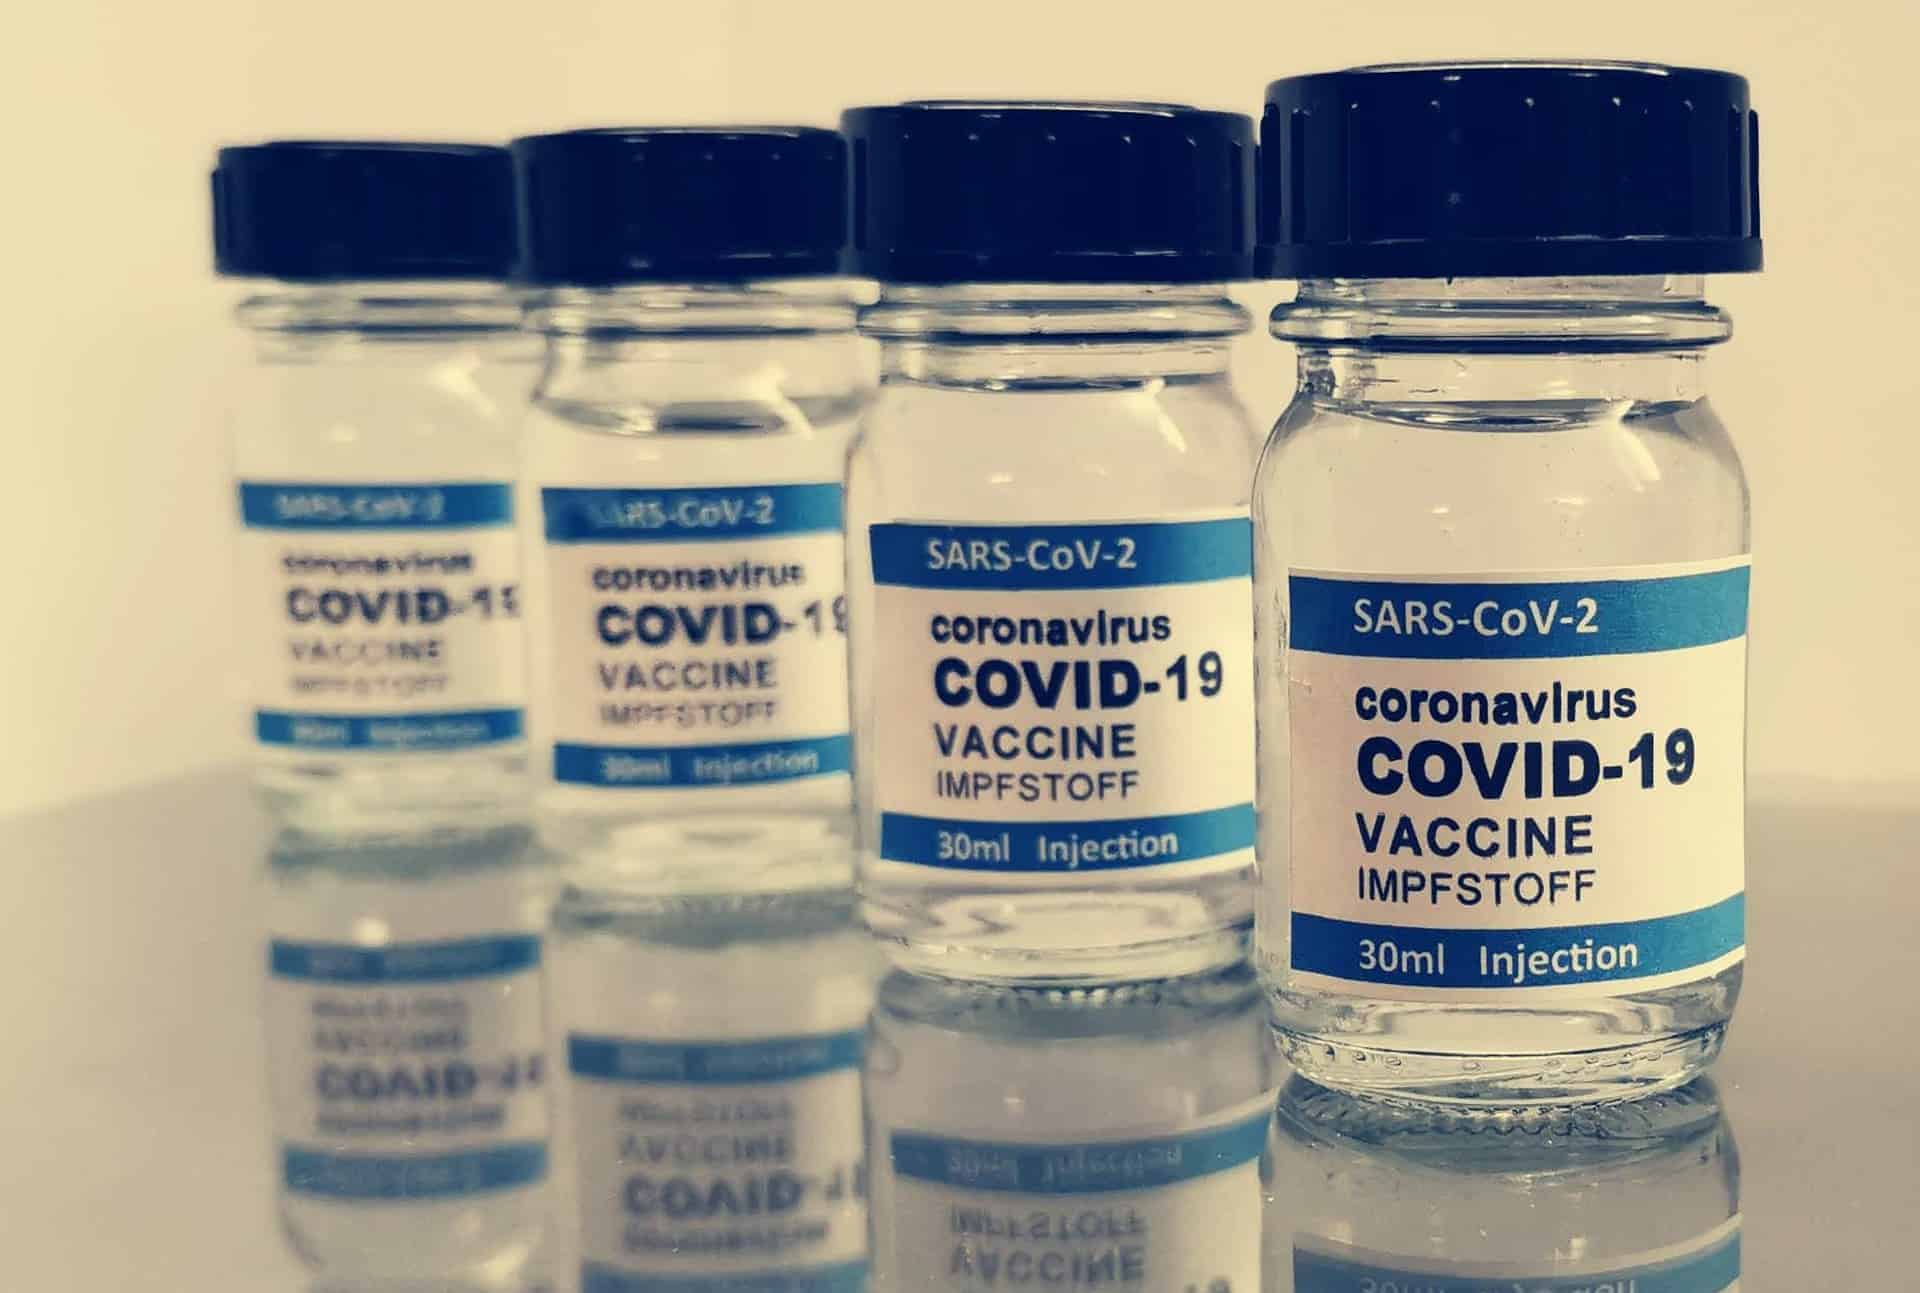 Coronavirus vaccines. Stock photo for illustrative purposes.